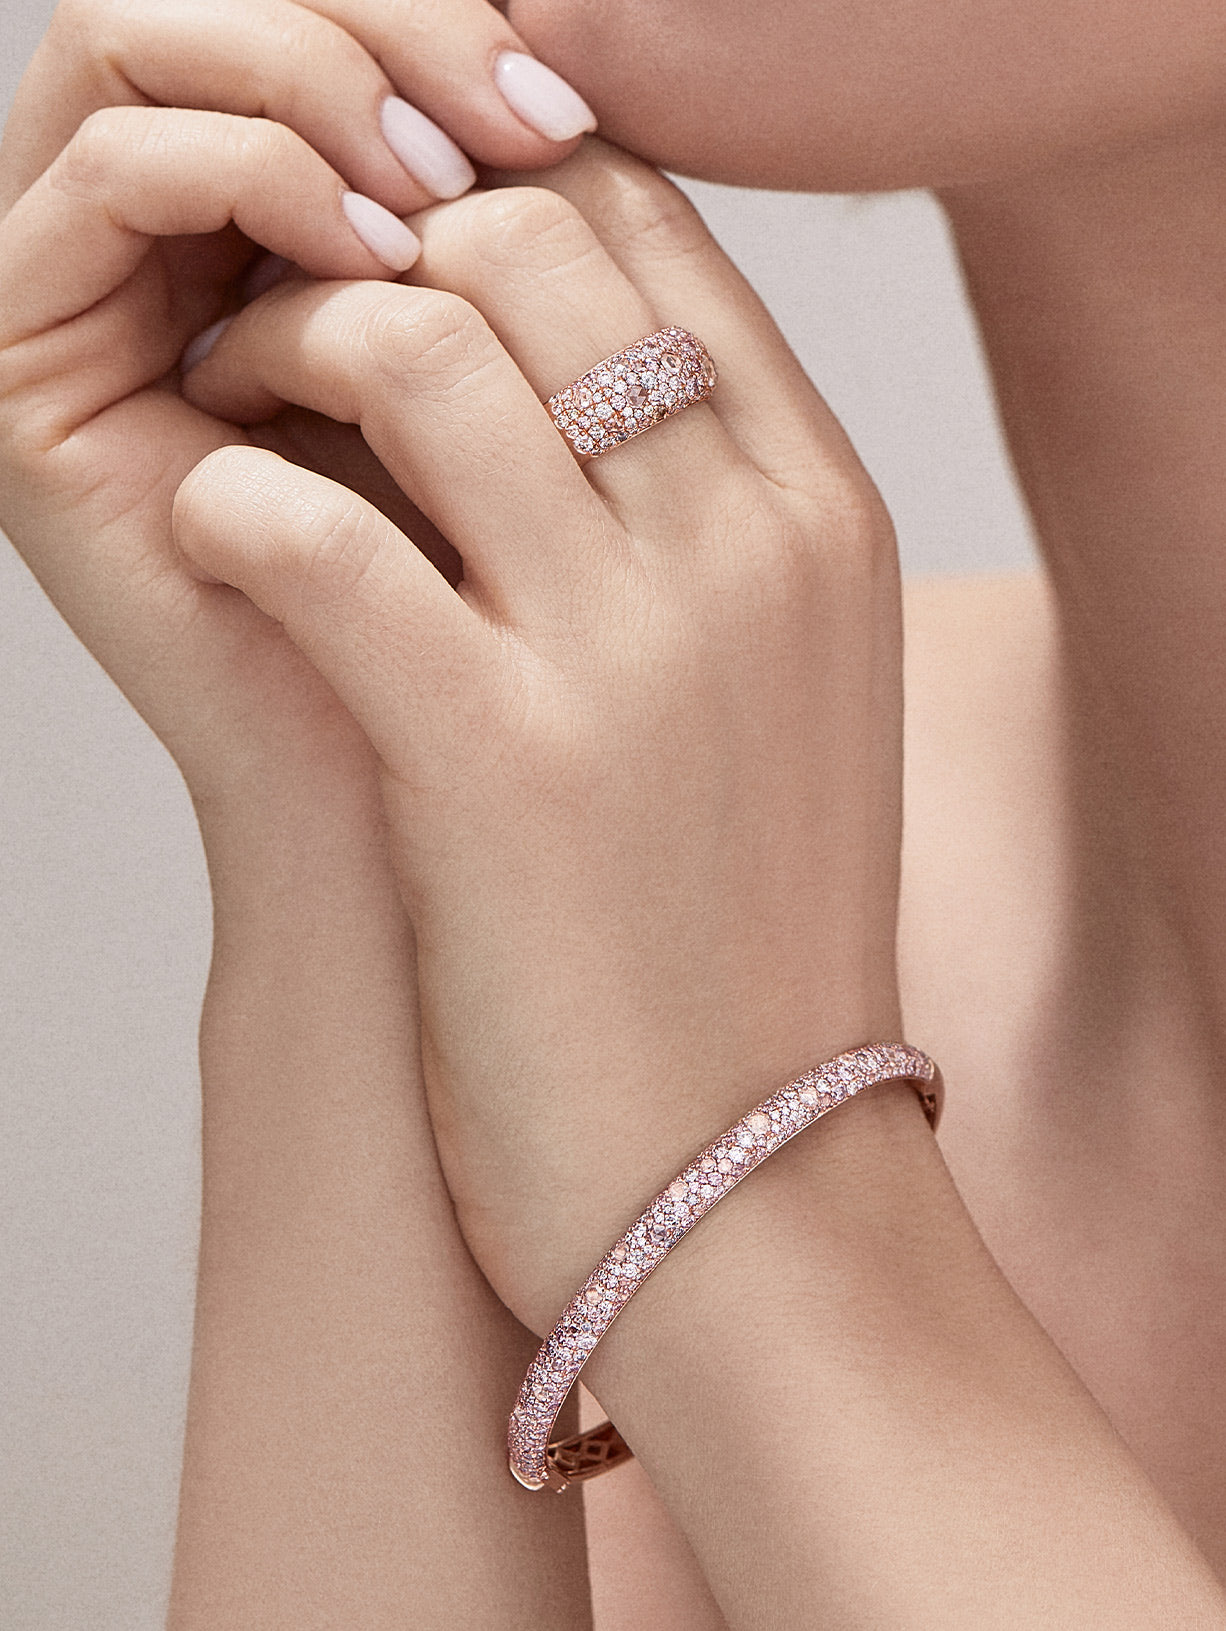 Argyle Pink™ Diamond Dome Pave Cuff Bracelet - Pink Diamonds, J FINE - J Fine, bracelet - Pink Diamond Jewelry, argyle-pink™-diamond-dome-pave-cuff-bracelet-by-j-fine - Argyle Pink Diamon